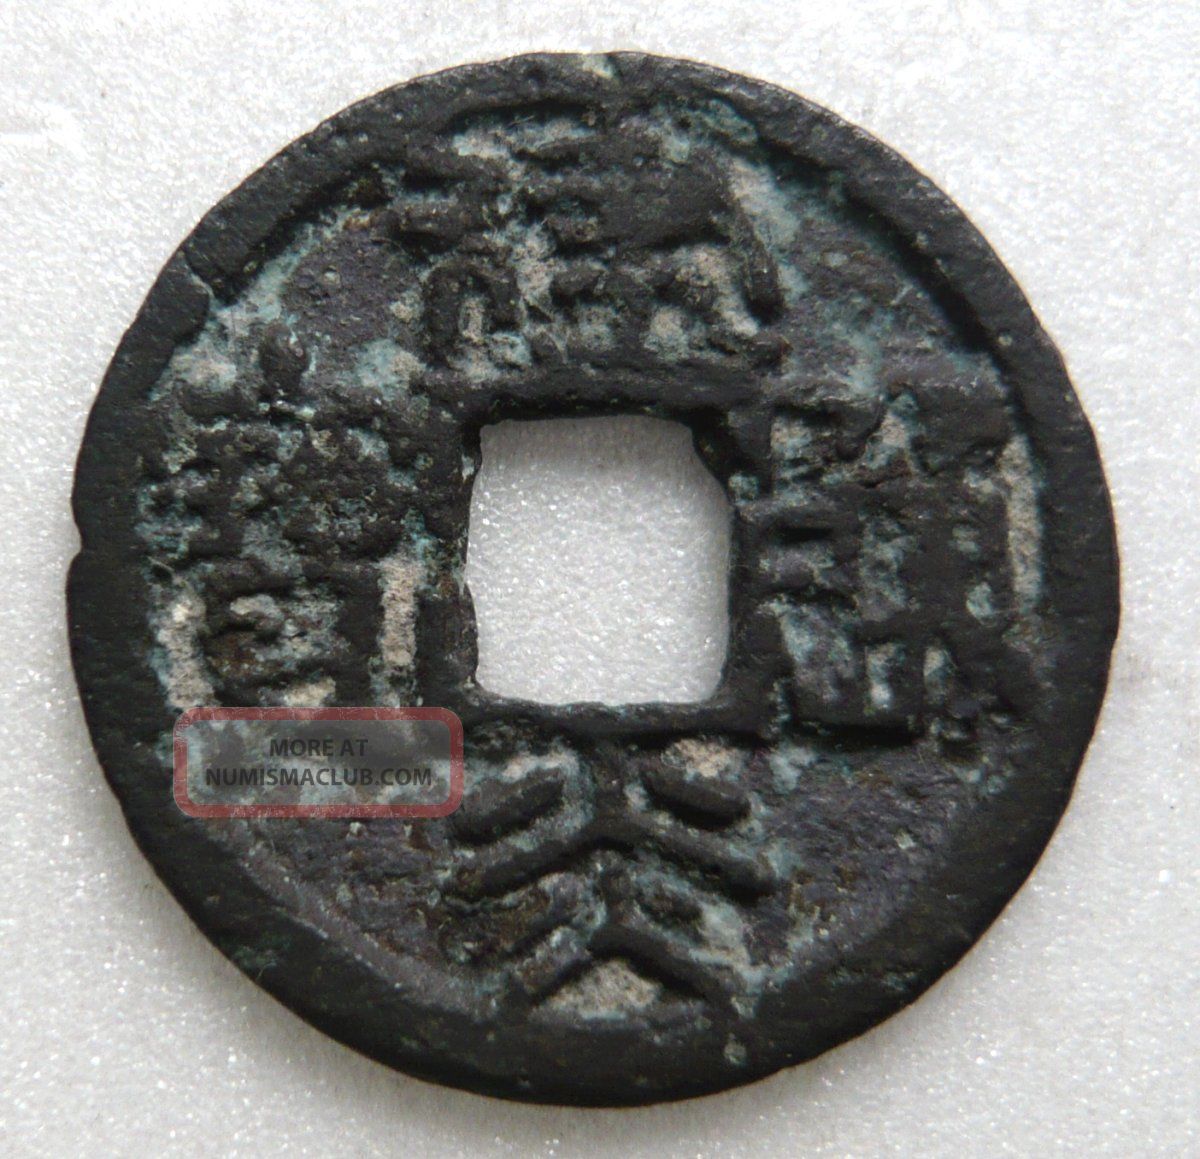 Rare Jian Yan Tong Bao 1 - Cash Bronze Coin Seal Script Large Characters,  Vf Coins: Medieval photo